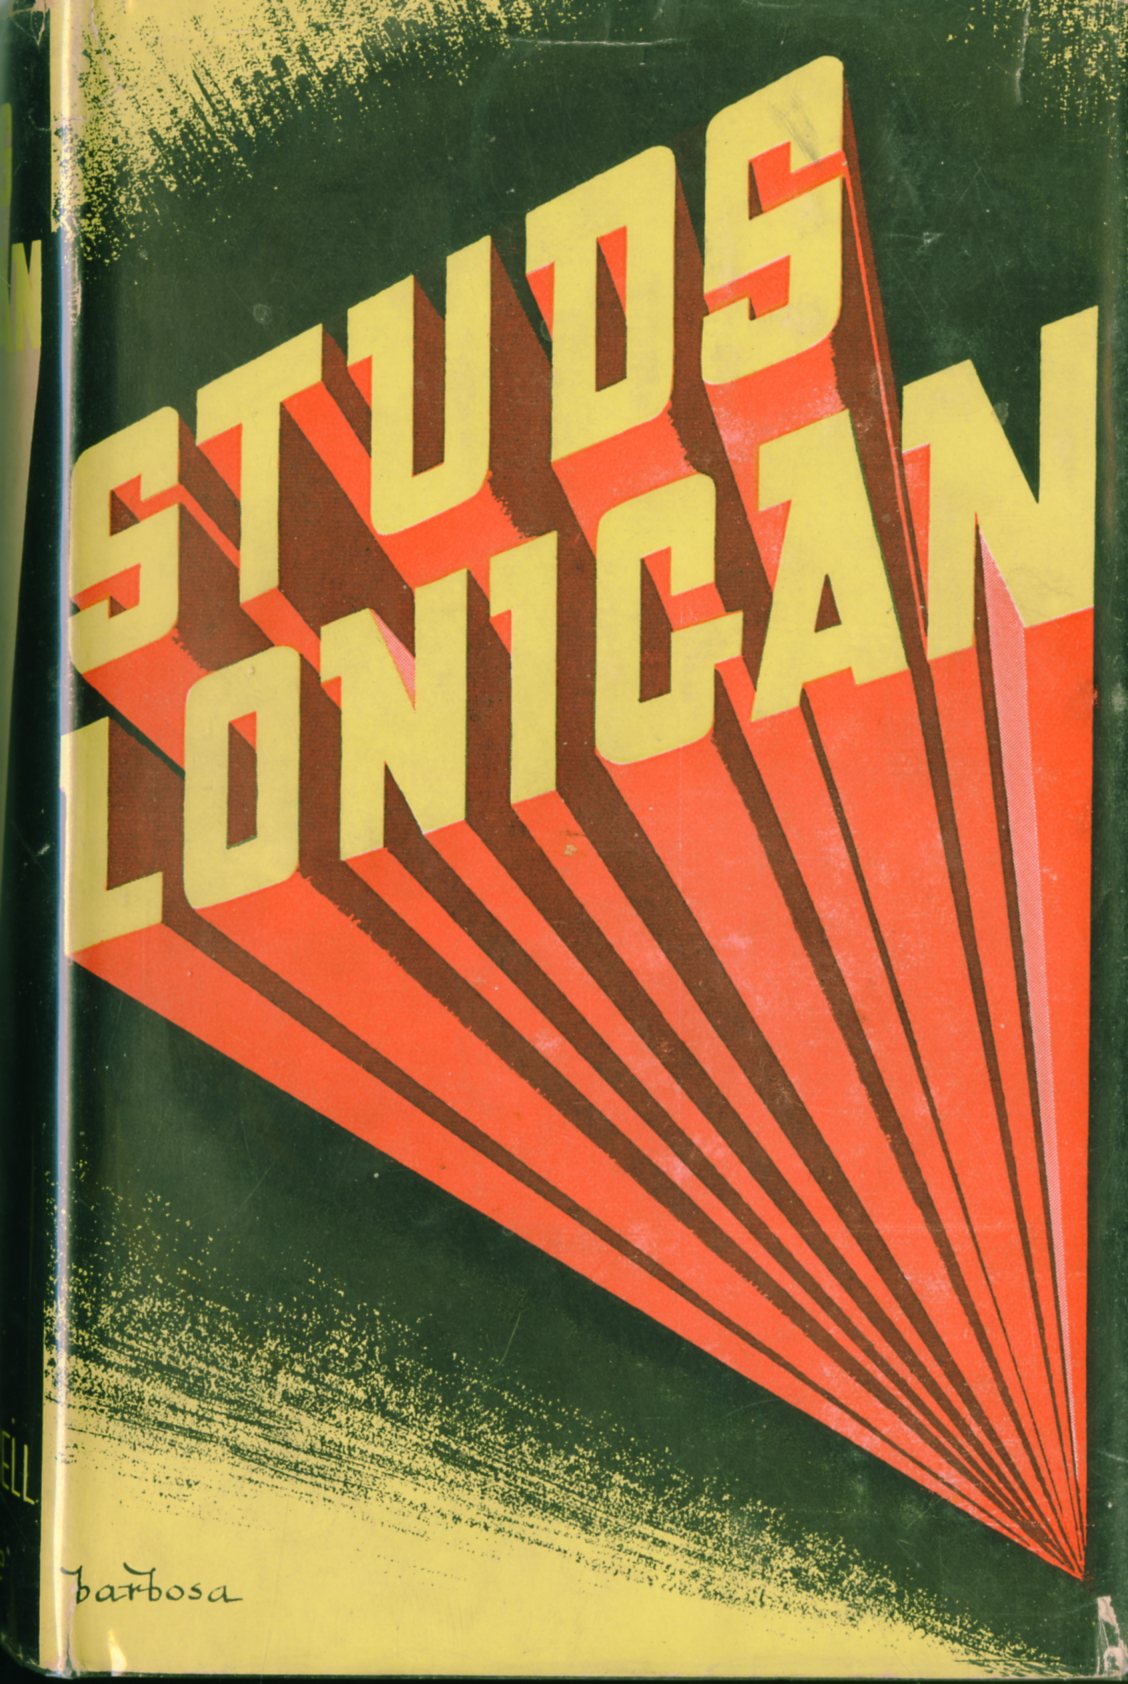 Farrell (James T.) Studs Lonigan, 8vo L. (Constable) 1936, cloth (yellow text), decor. d.j.